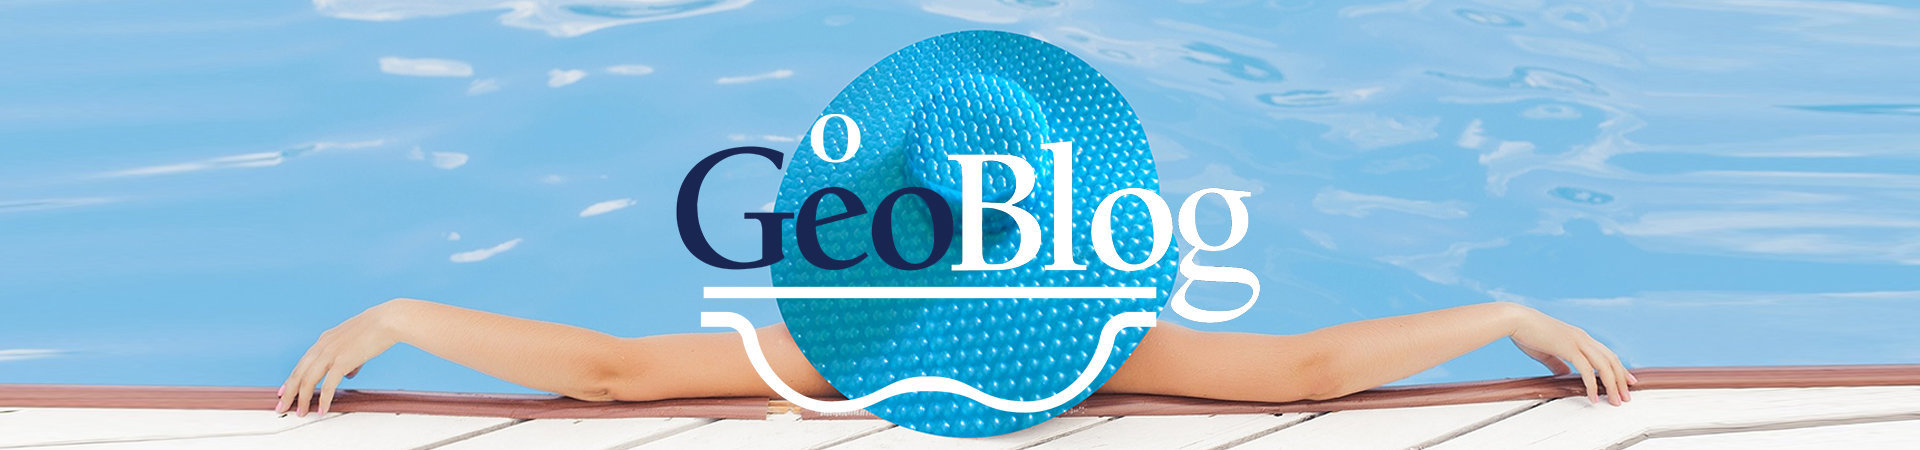 Senhora-GeoBlog-no-chapeu-Geobubble-sentado-junto-a-piscina